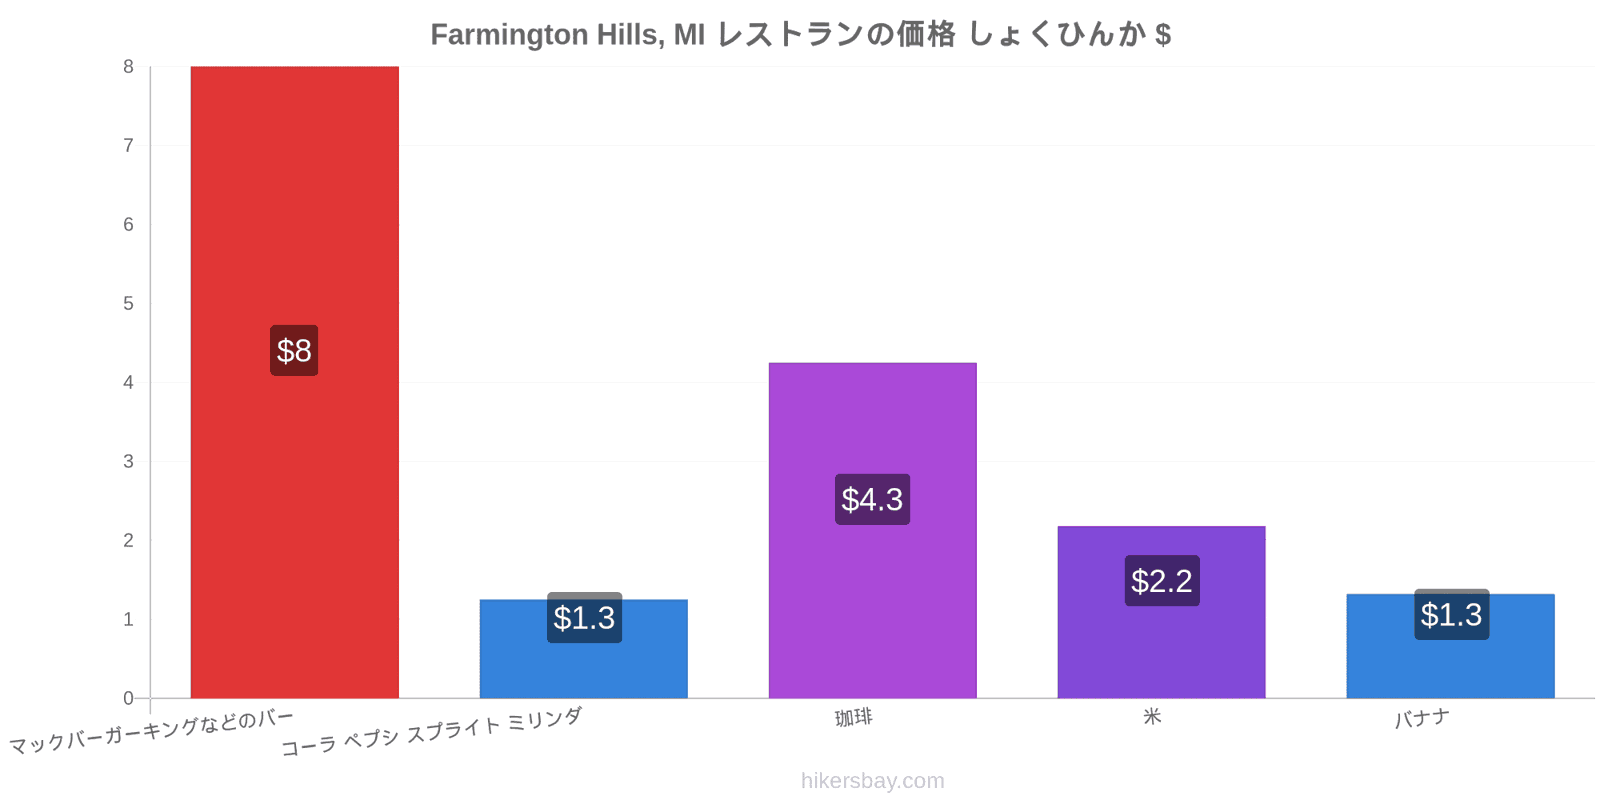 Farmington Hills, MI 価格の変更 hikersbay.com